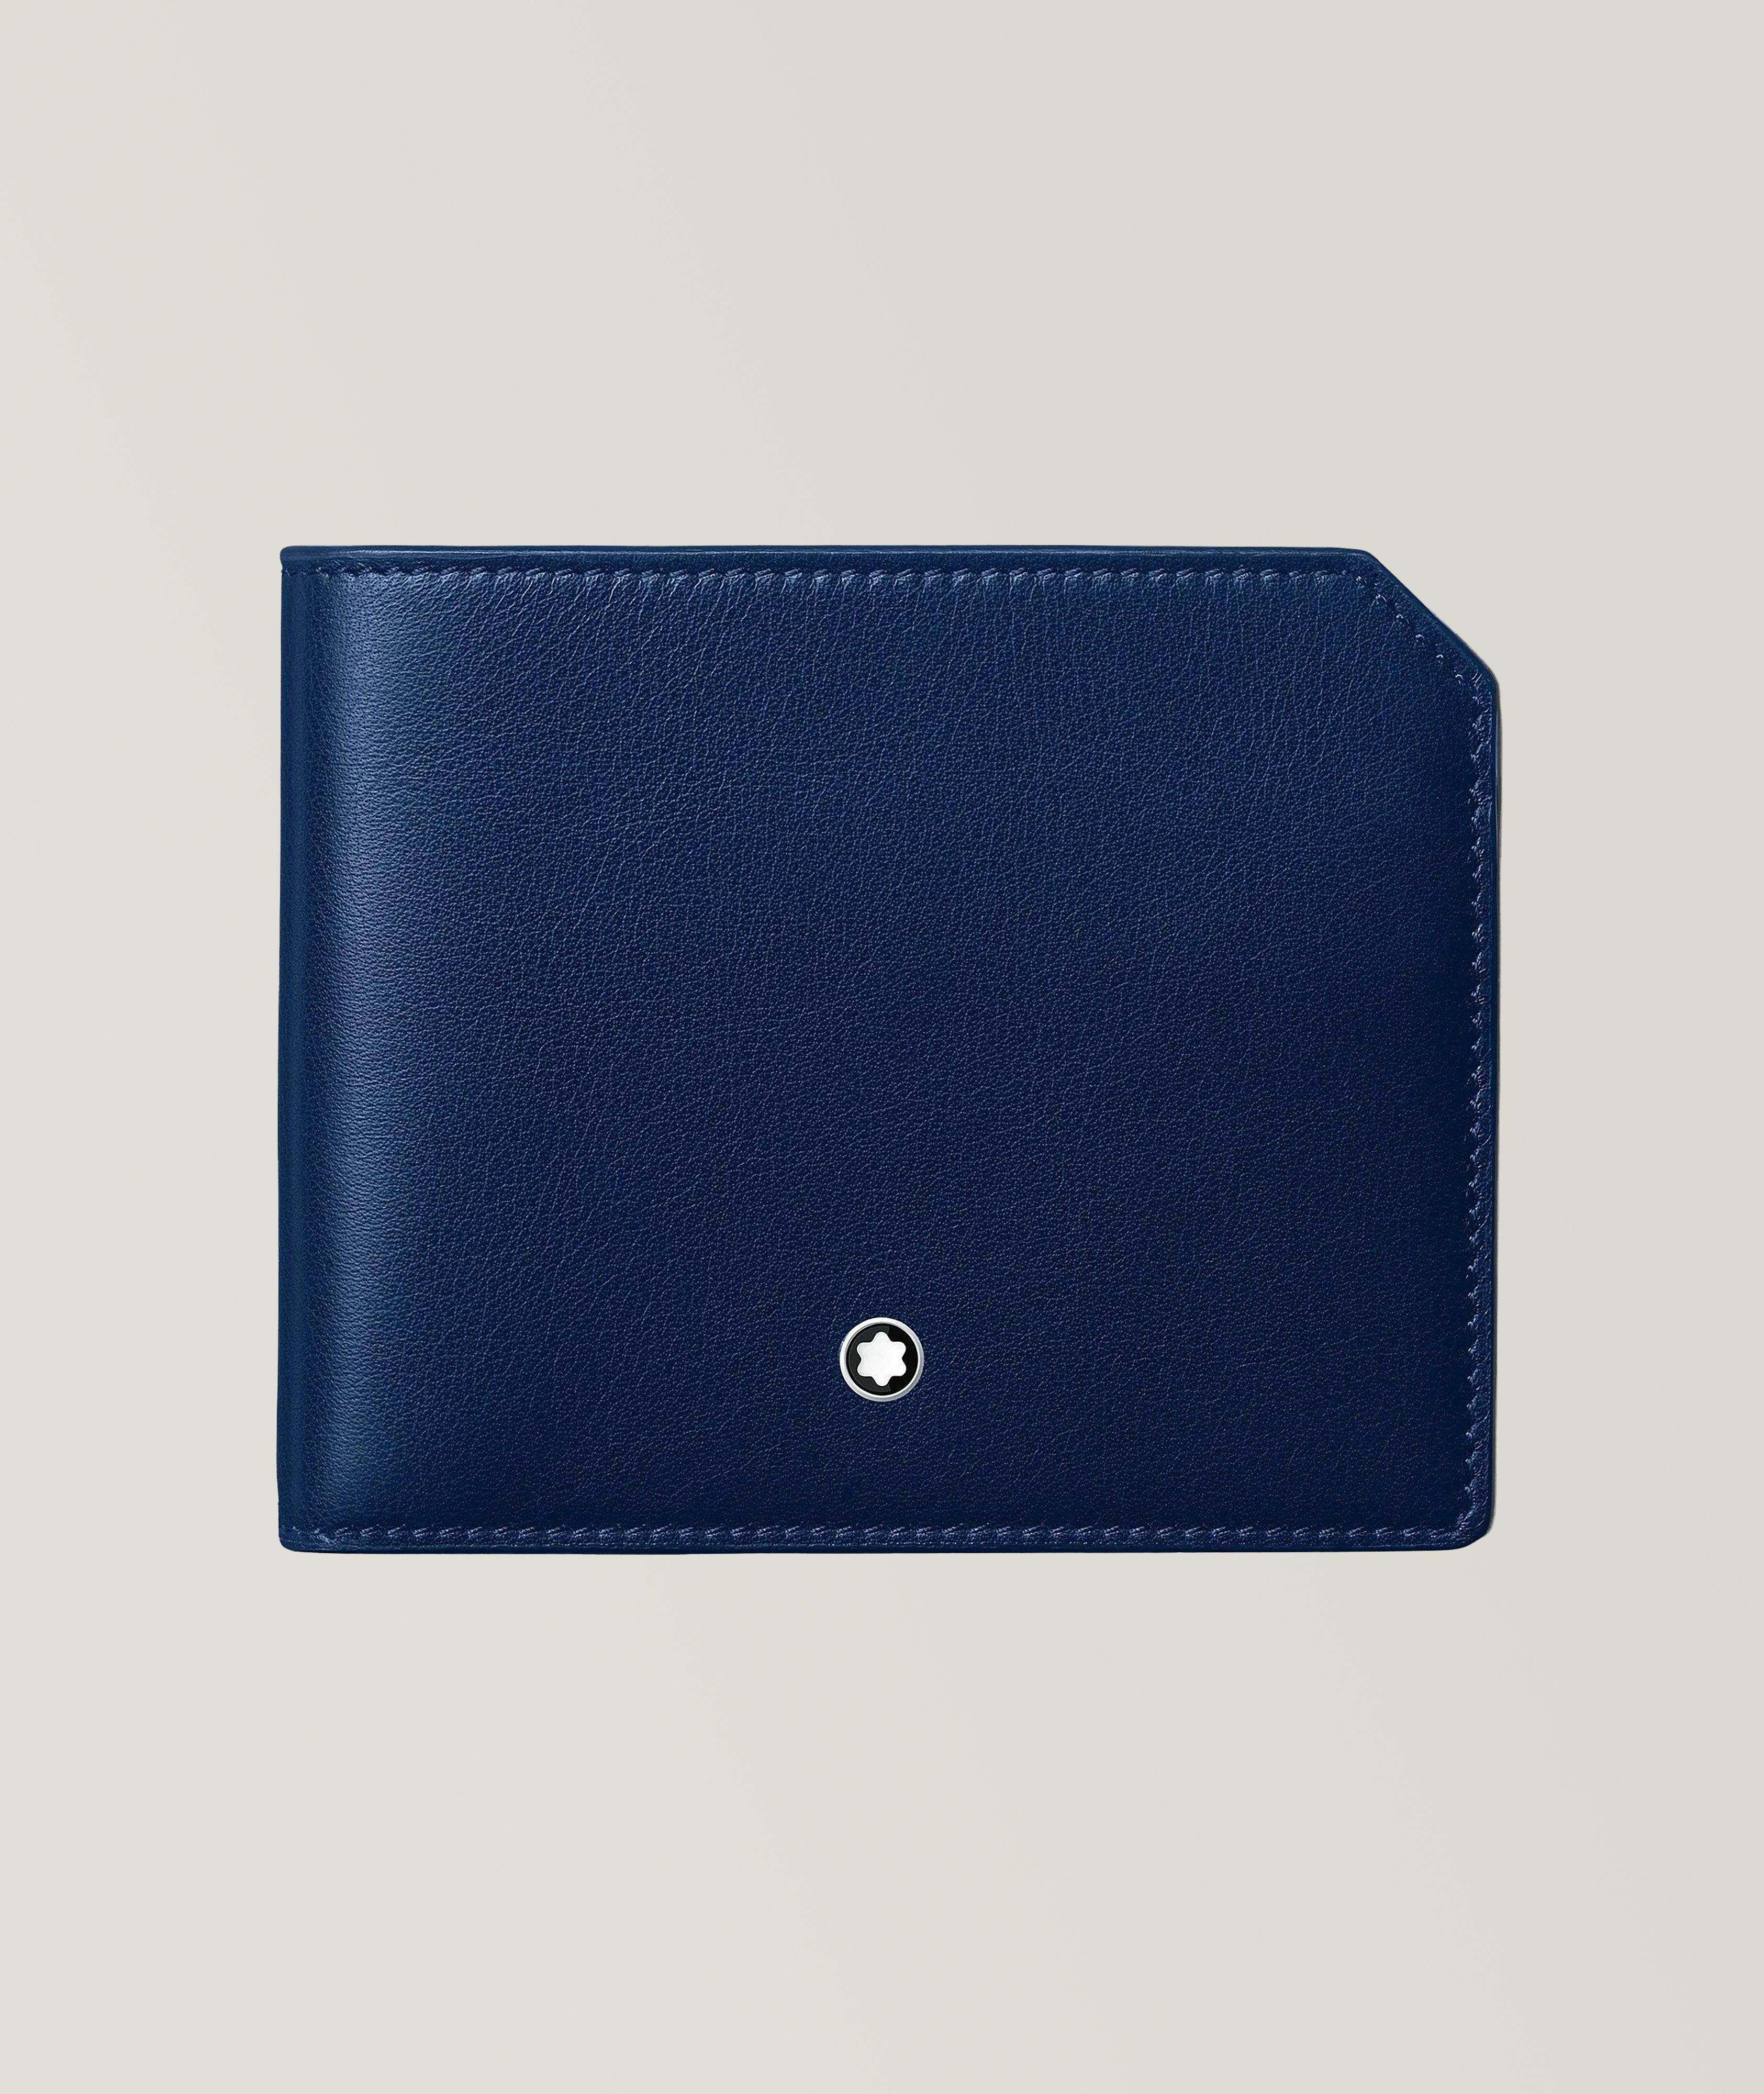 Meisterstück Selection Leather Bifold Wallet image 0